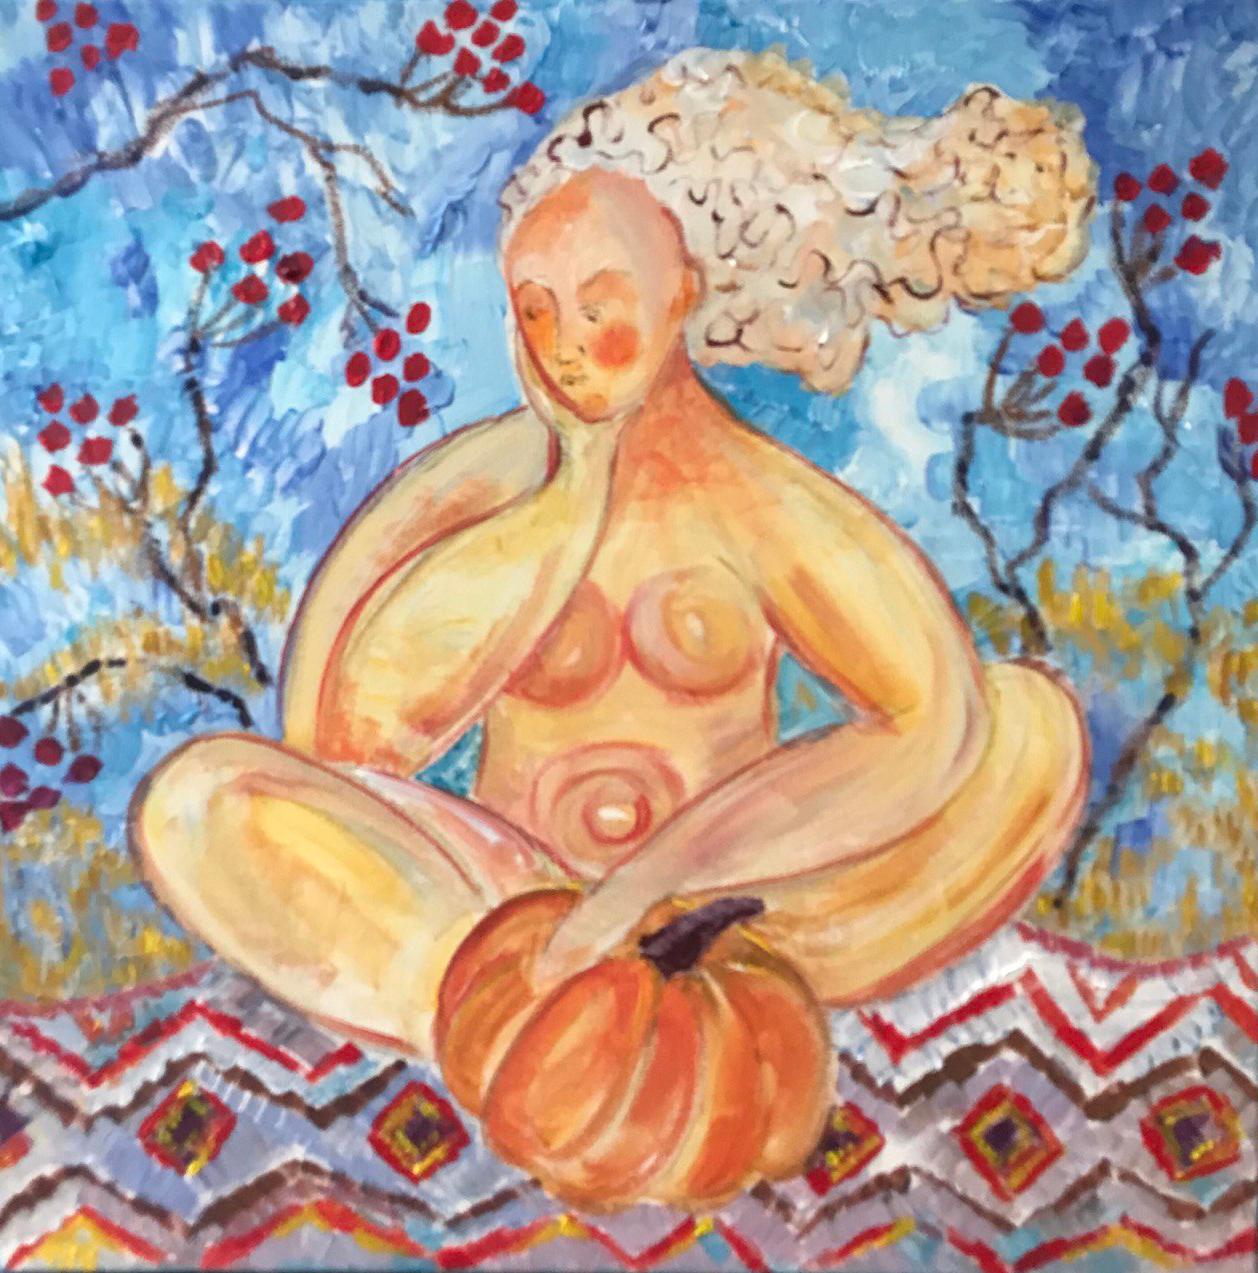 Tetiana Pchelnykova Nude Painting - Rebirth: Symbols of Motherhood "Being" series, original painting 